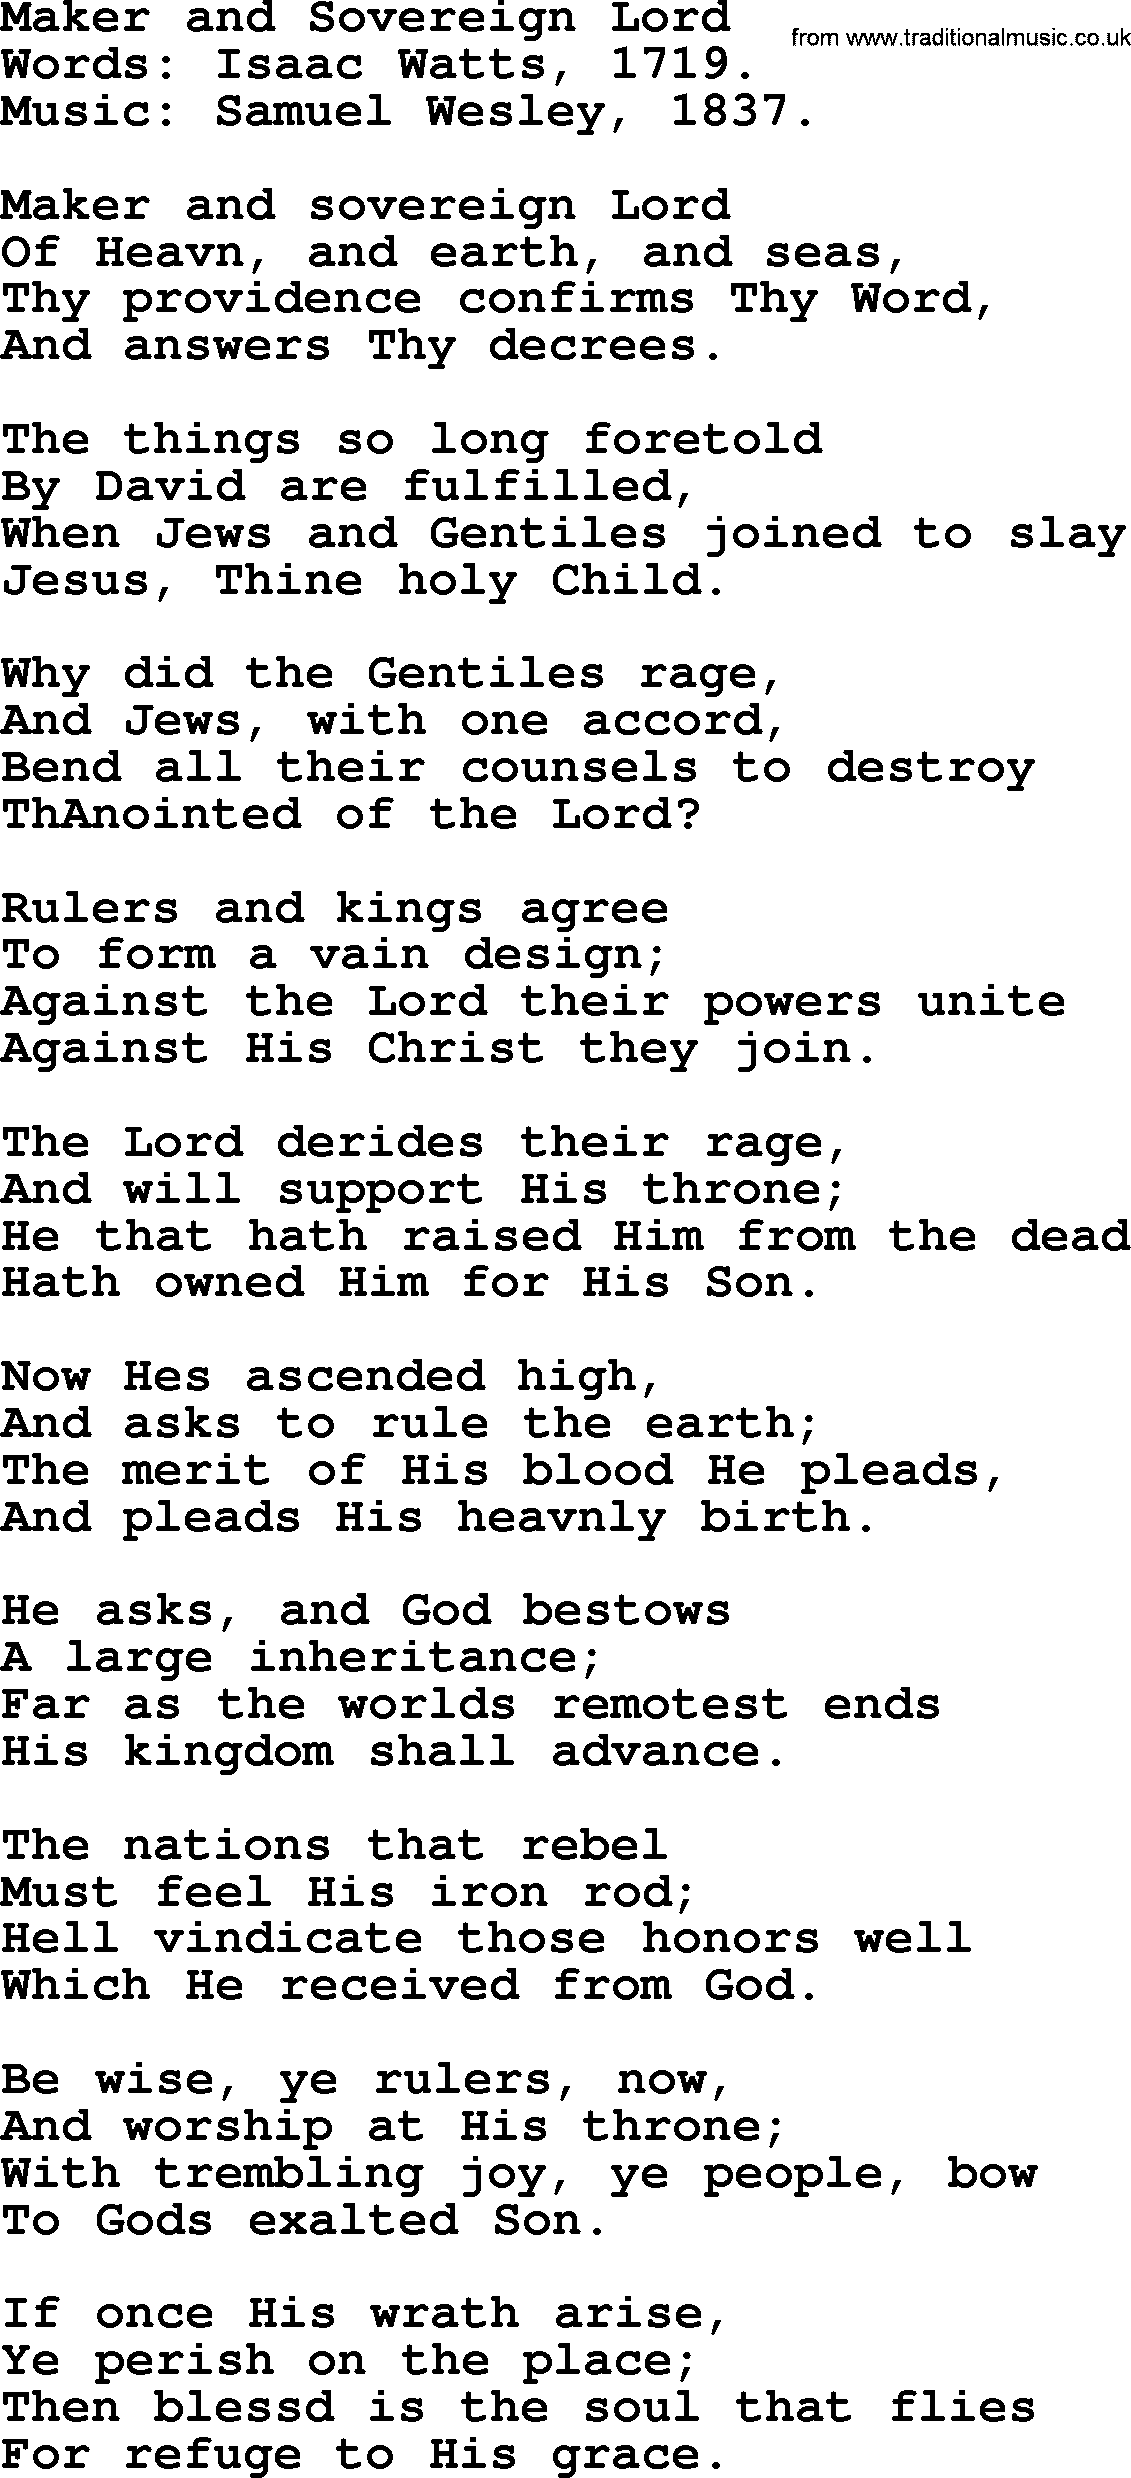 Isaac Watts Christian hymn: Maker and Sovereign Lord- lyricss